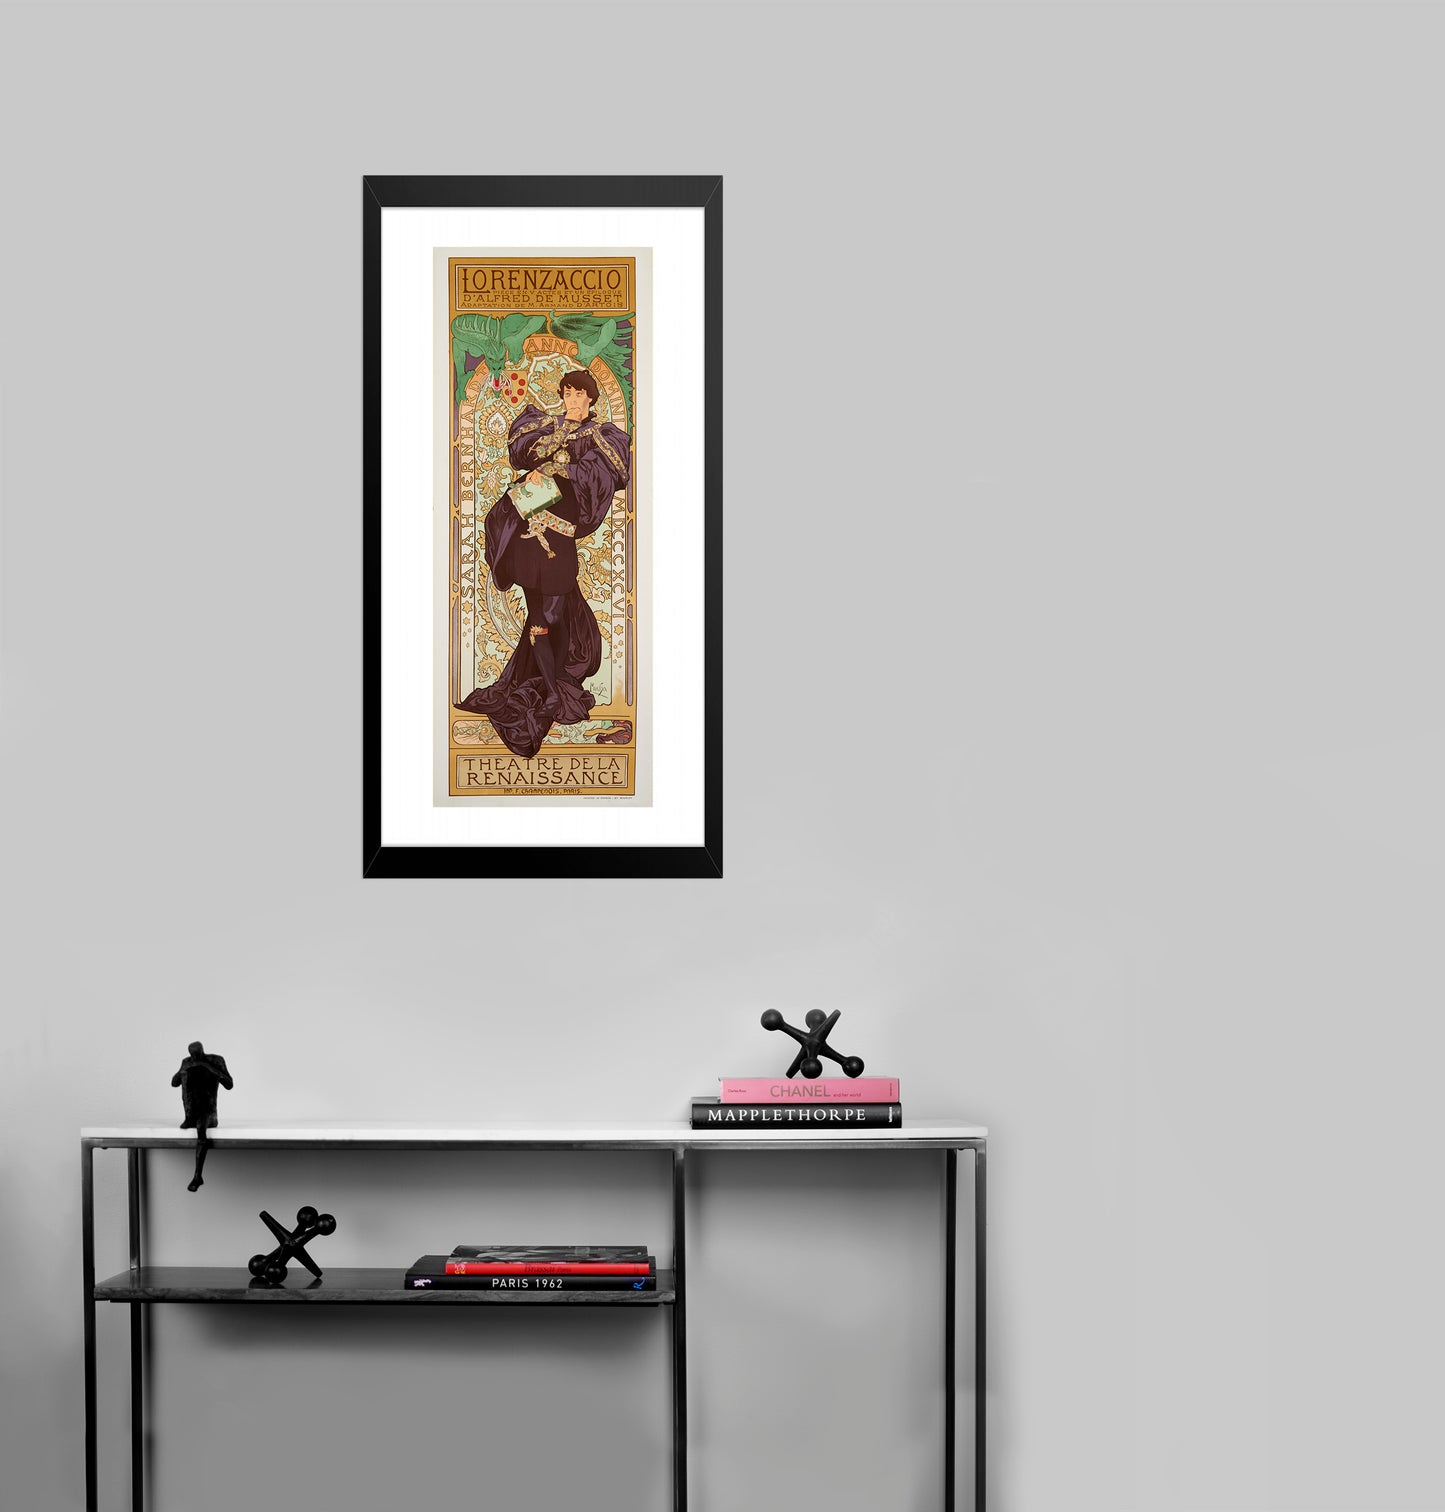 Lorenzaccio - Sarah Bernhardt (after) Alphonse Mucha, 1969 - Mourlot Editions - Fine_Art - Poster - Lithograph - Wall Art - Vintage - Prints - Original